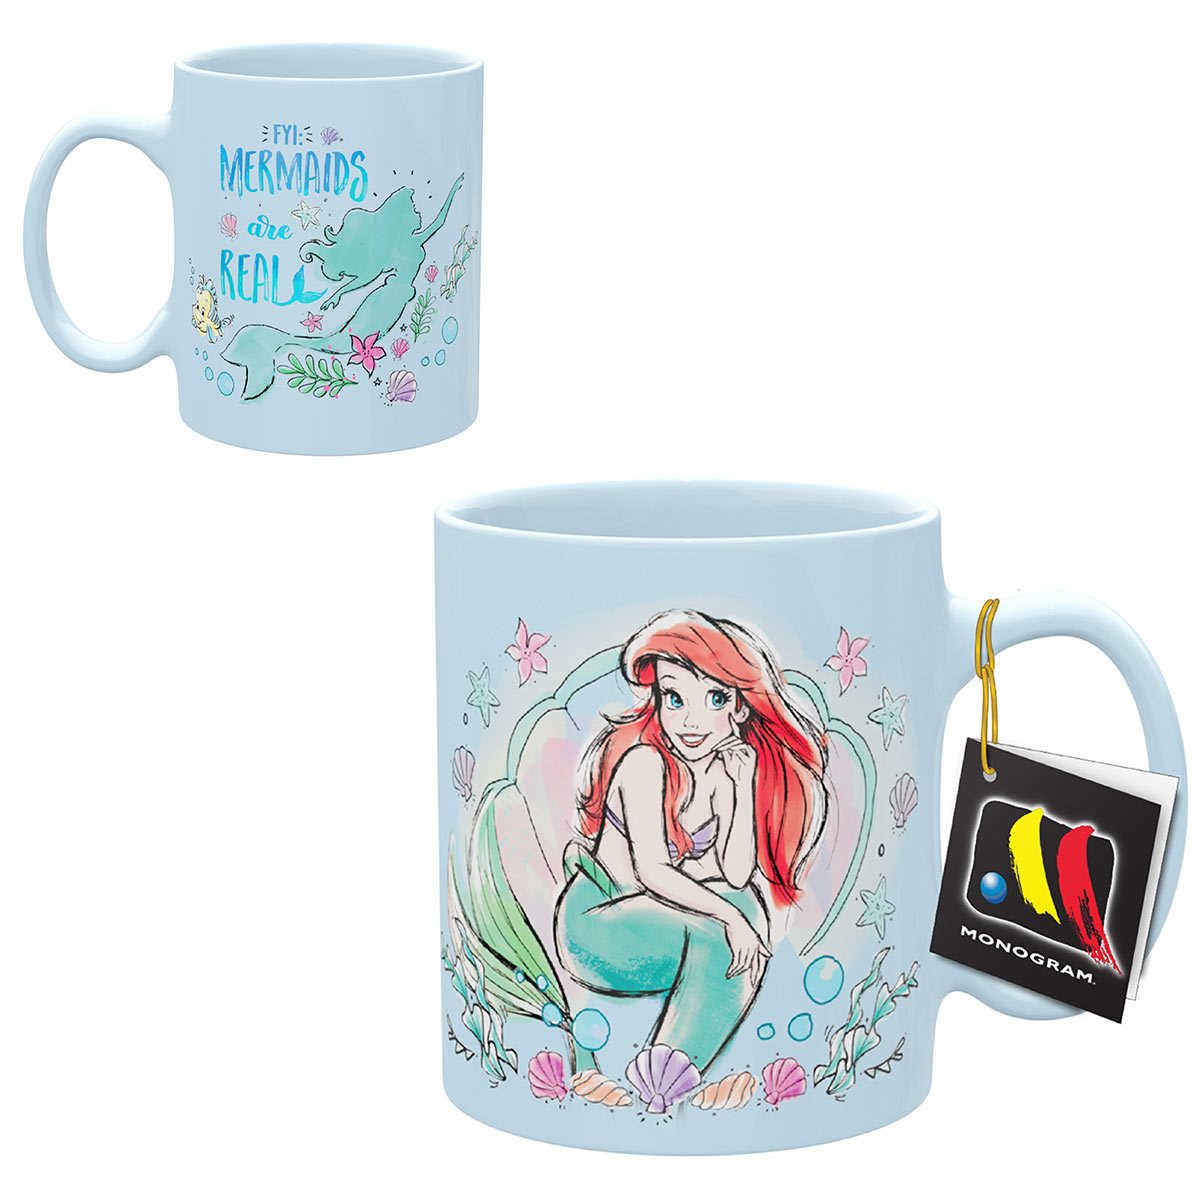 2022 wdw world of disney little mermaid ariel mug thingamabobs-1 